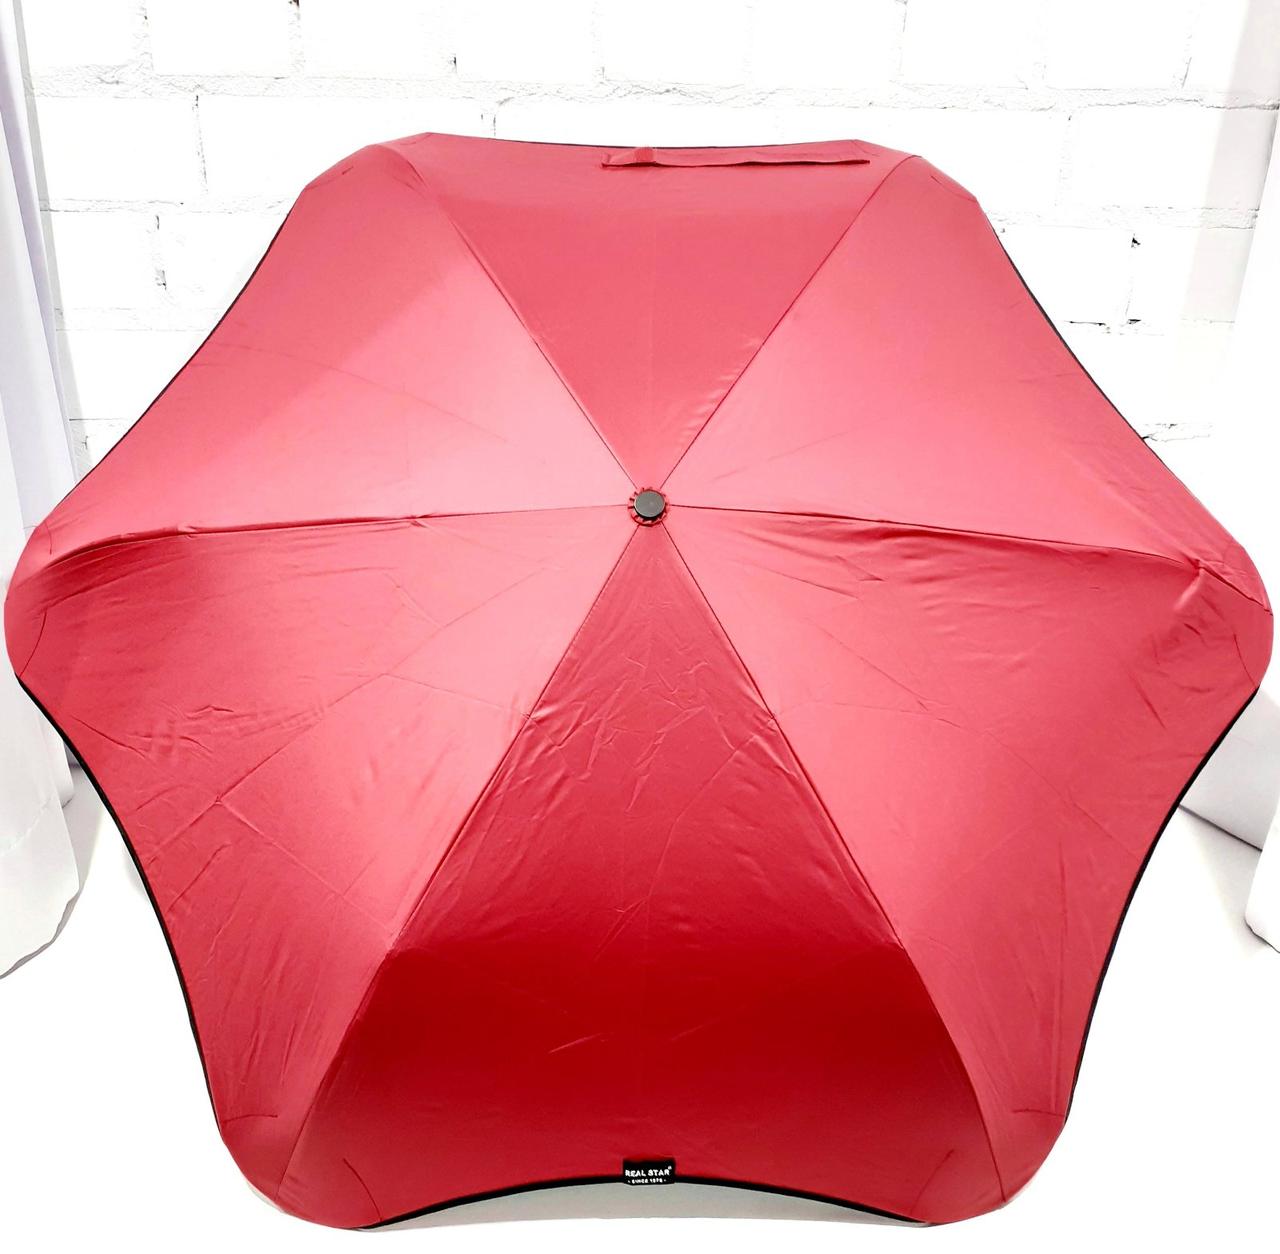 Складана парасоля механіка, бордовий, поліестр/карбон Арт.3193 RST (Китай) (Зонт жіночий, бордо, механіка, поліестер/карбон)